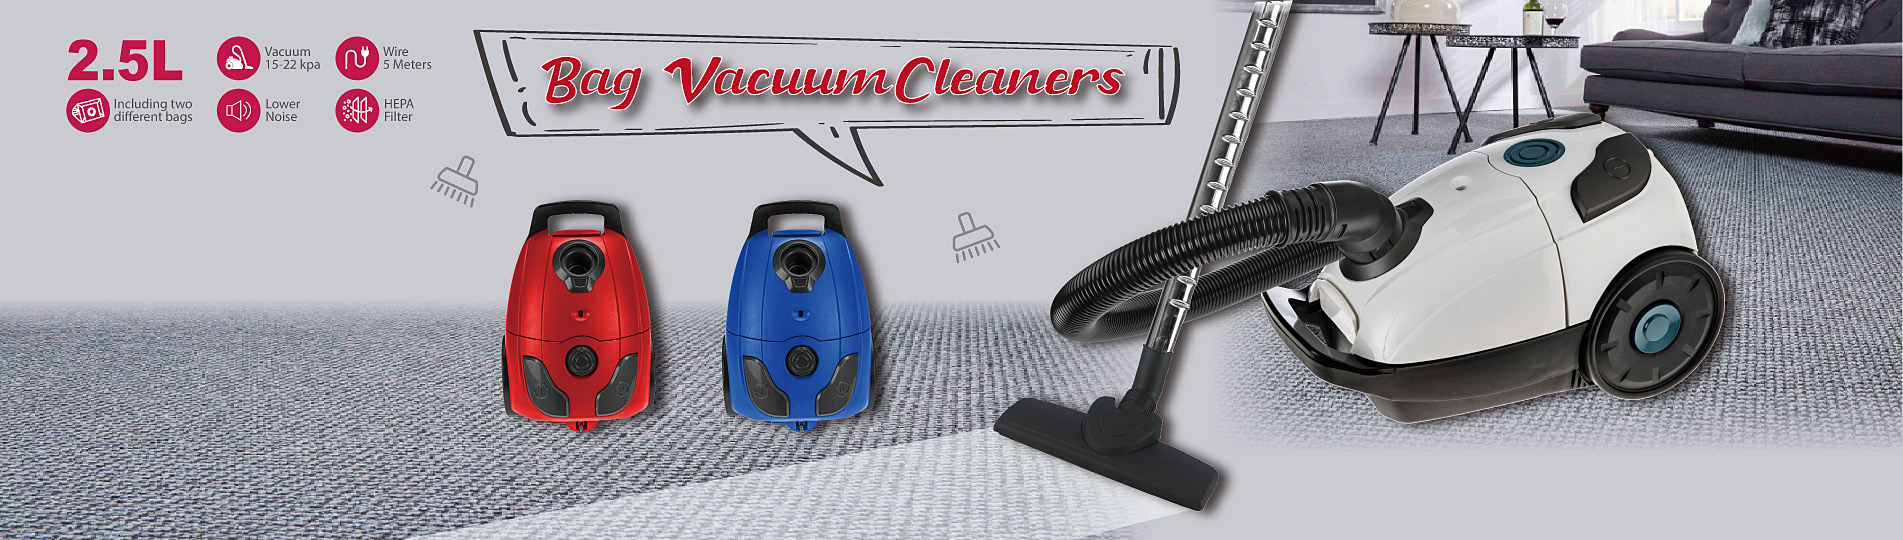 bag vacuum cleaners